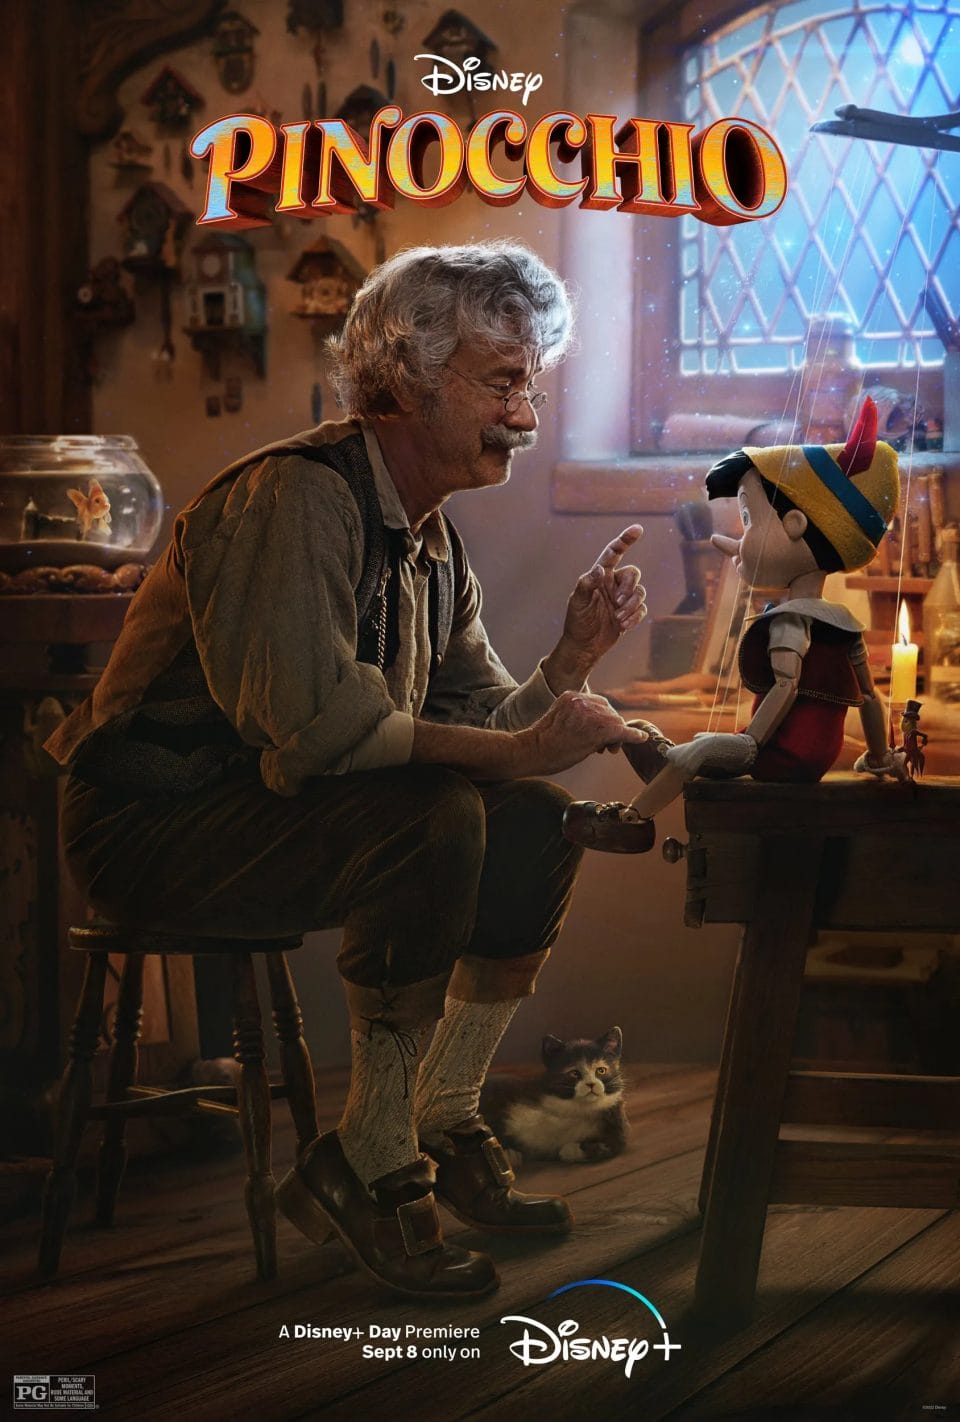 How 'Pinocchio' Reframes Childhood Memories